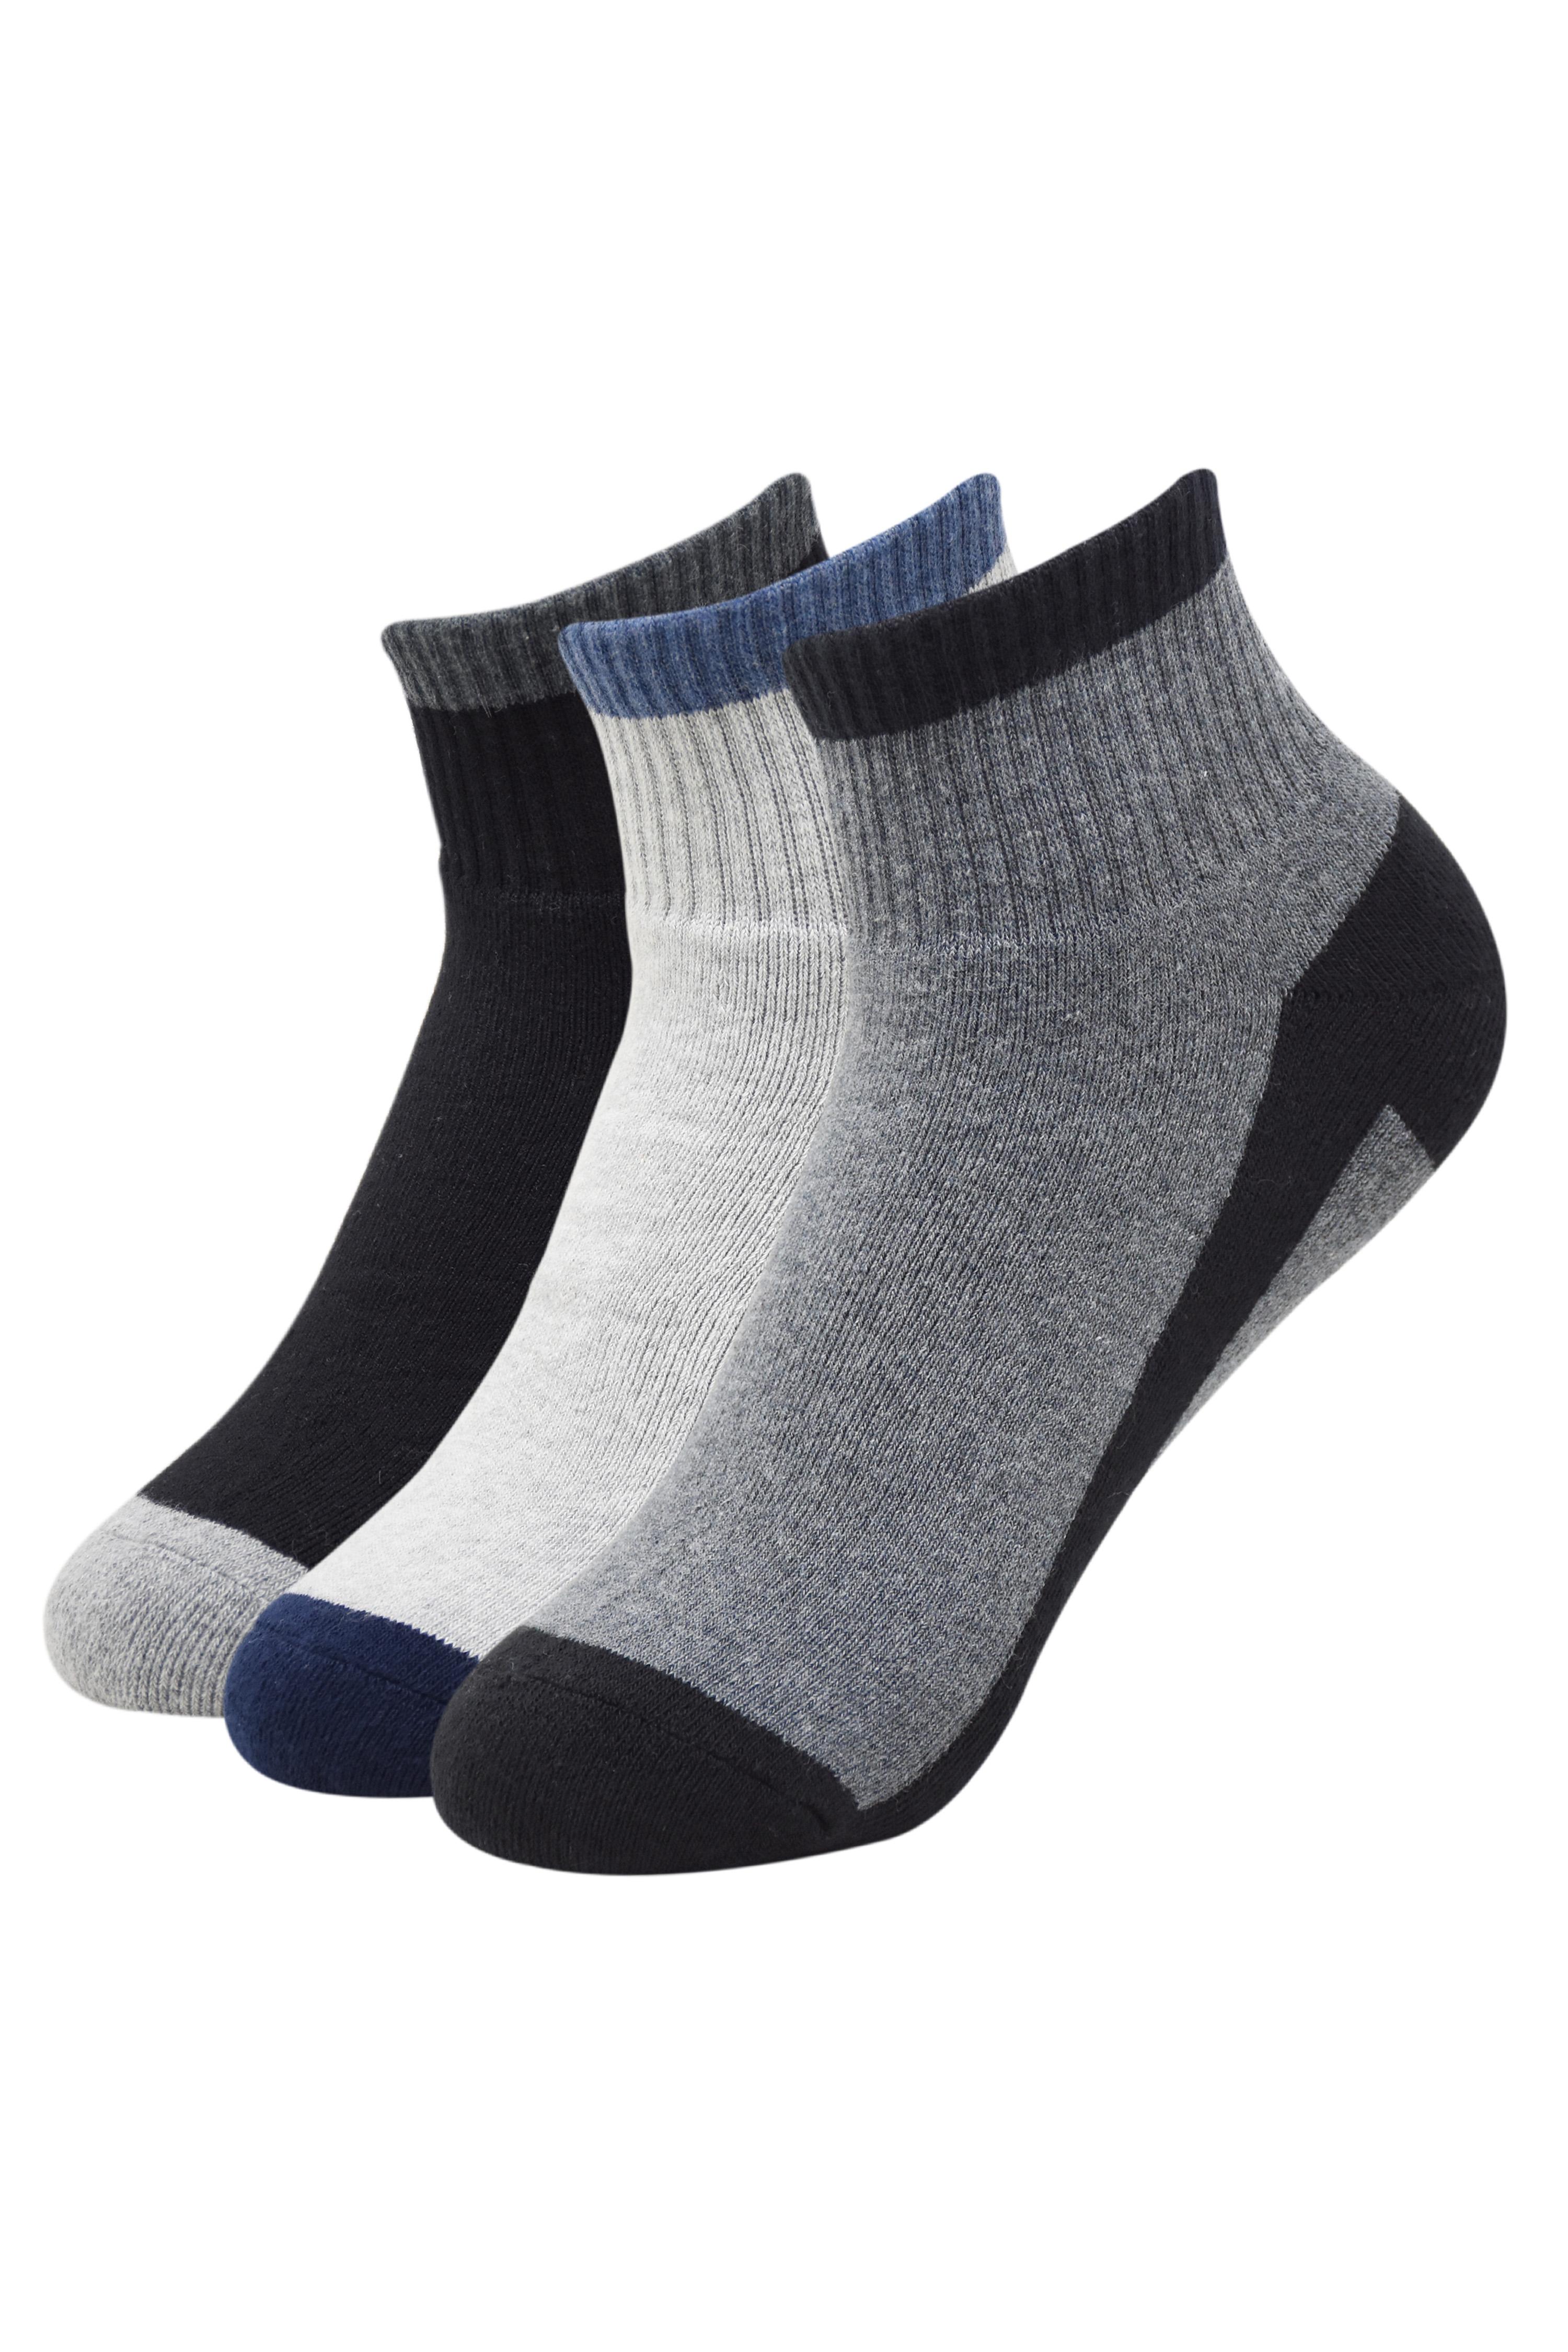 Buy Balenzia Men Cushioned High Ankle socks for sports- Dark Grey ...